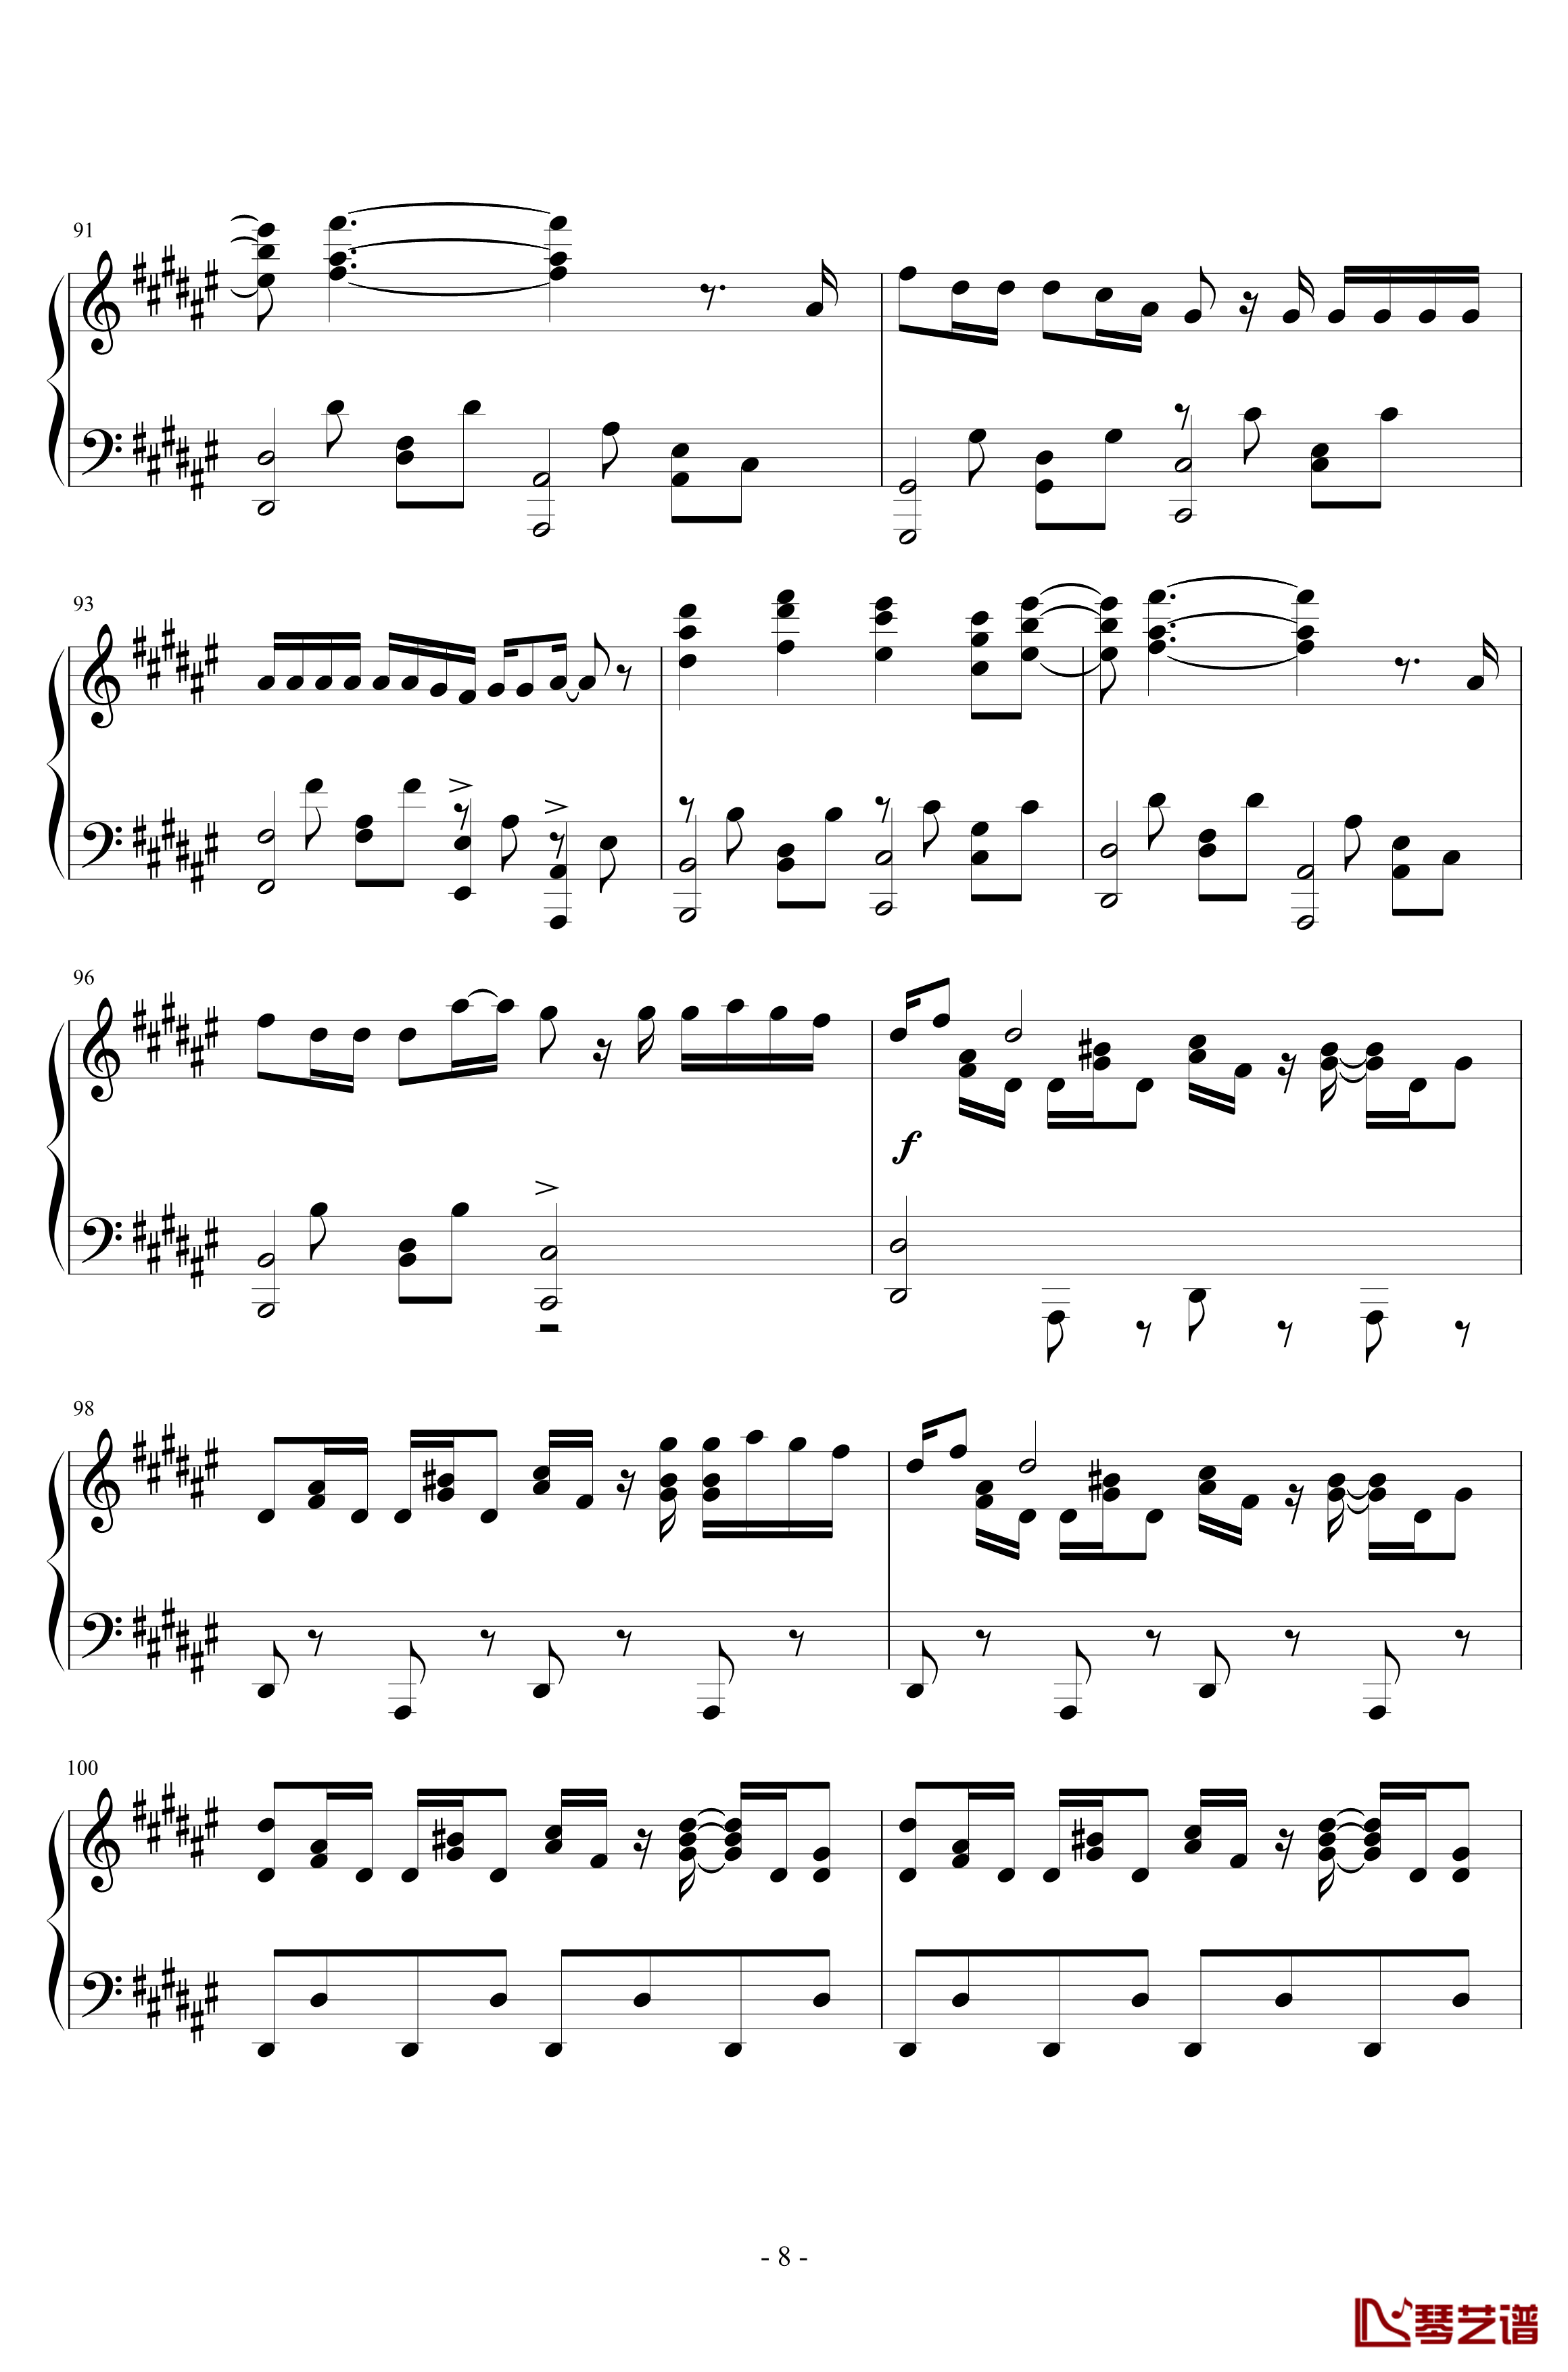 SNOBBISM钢琴谱 -Neru8